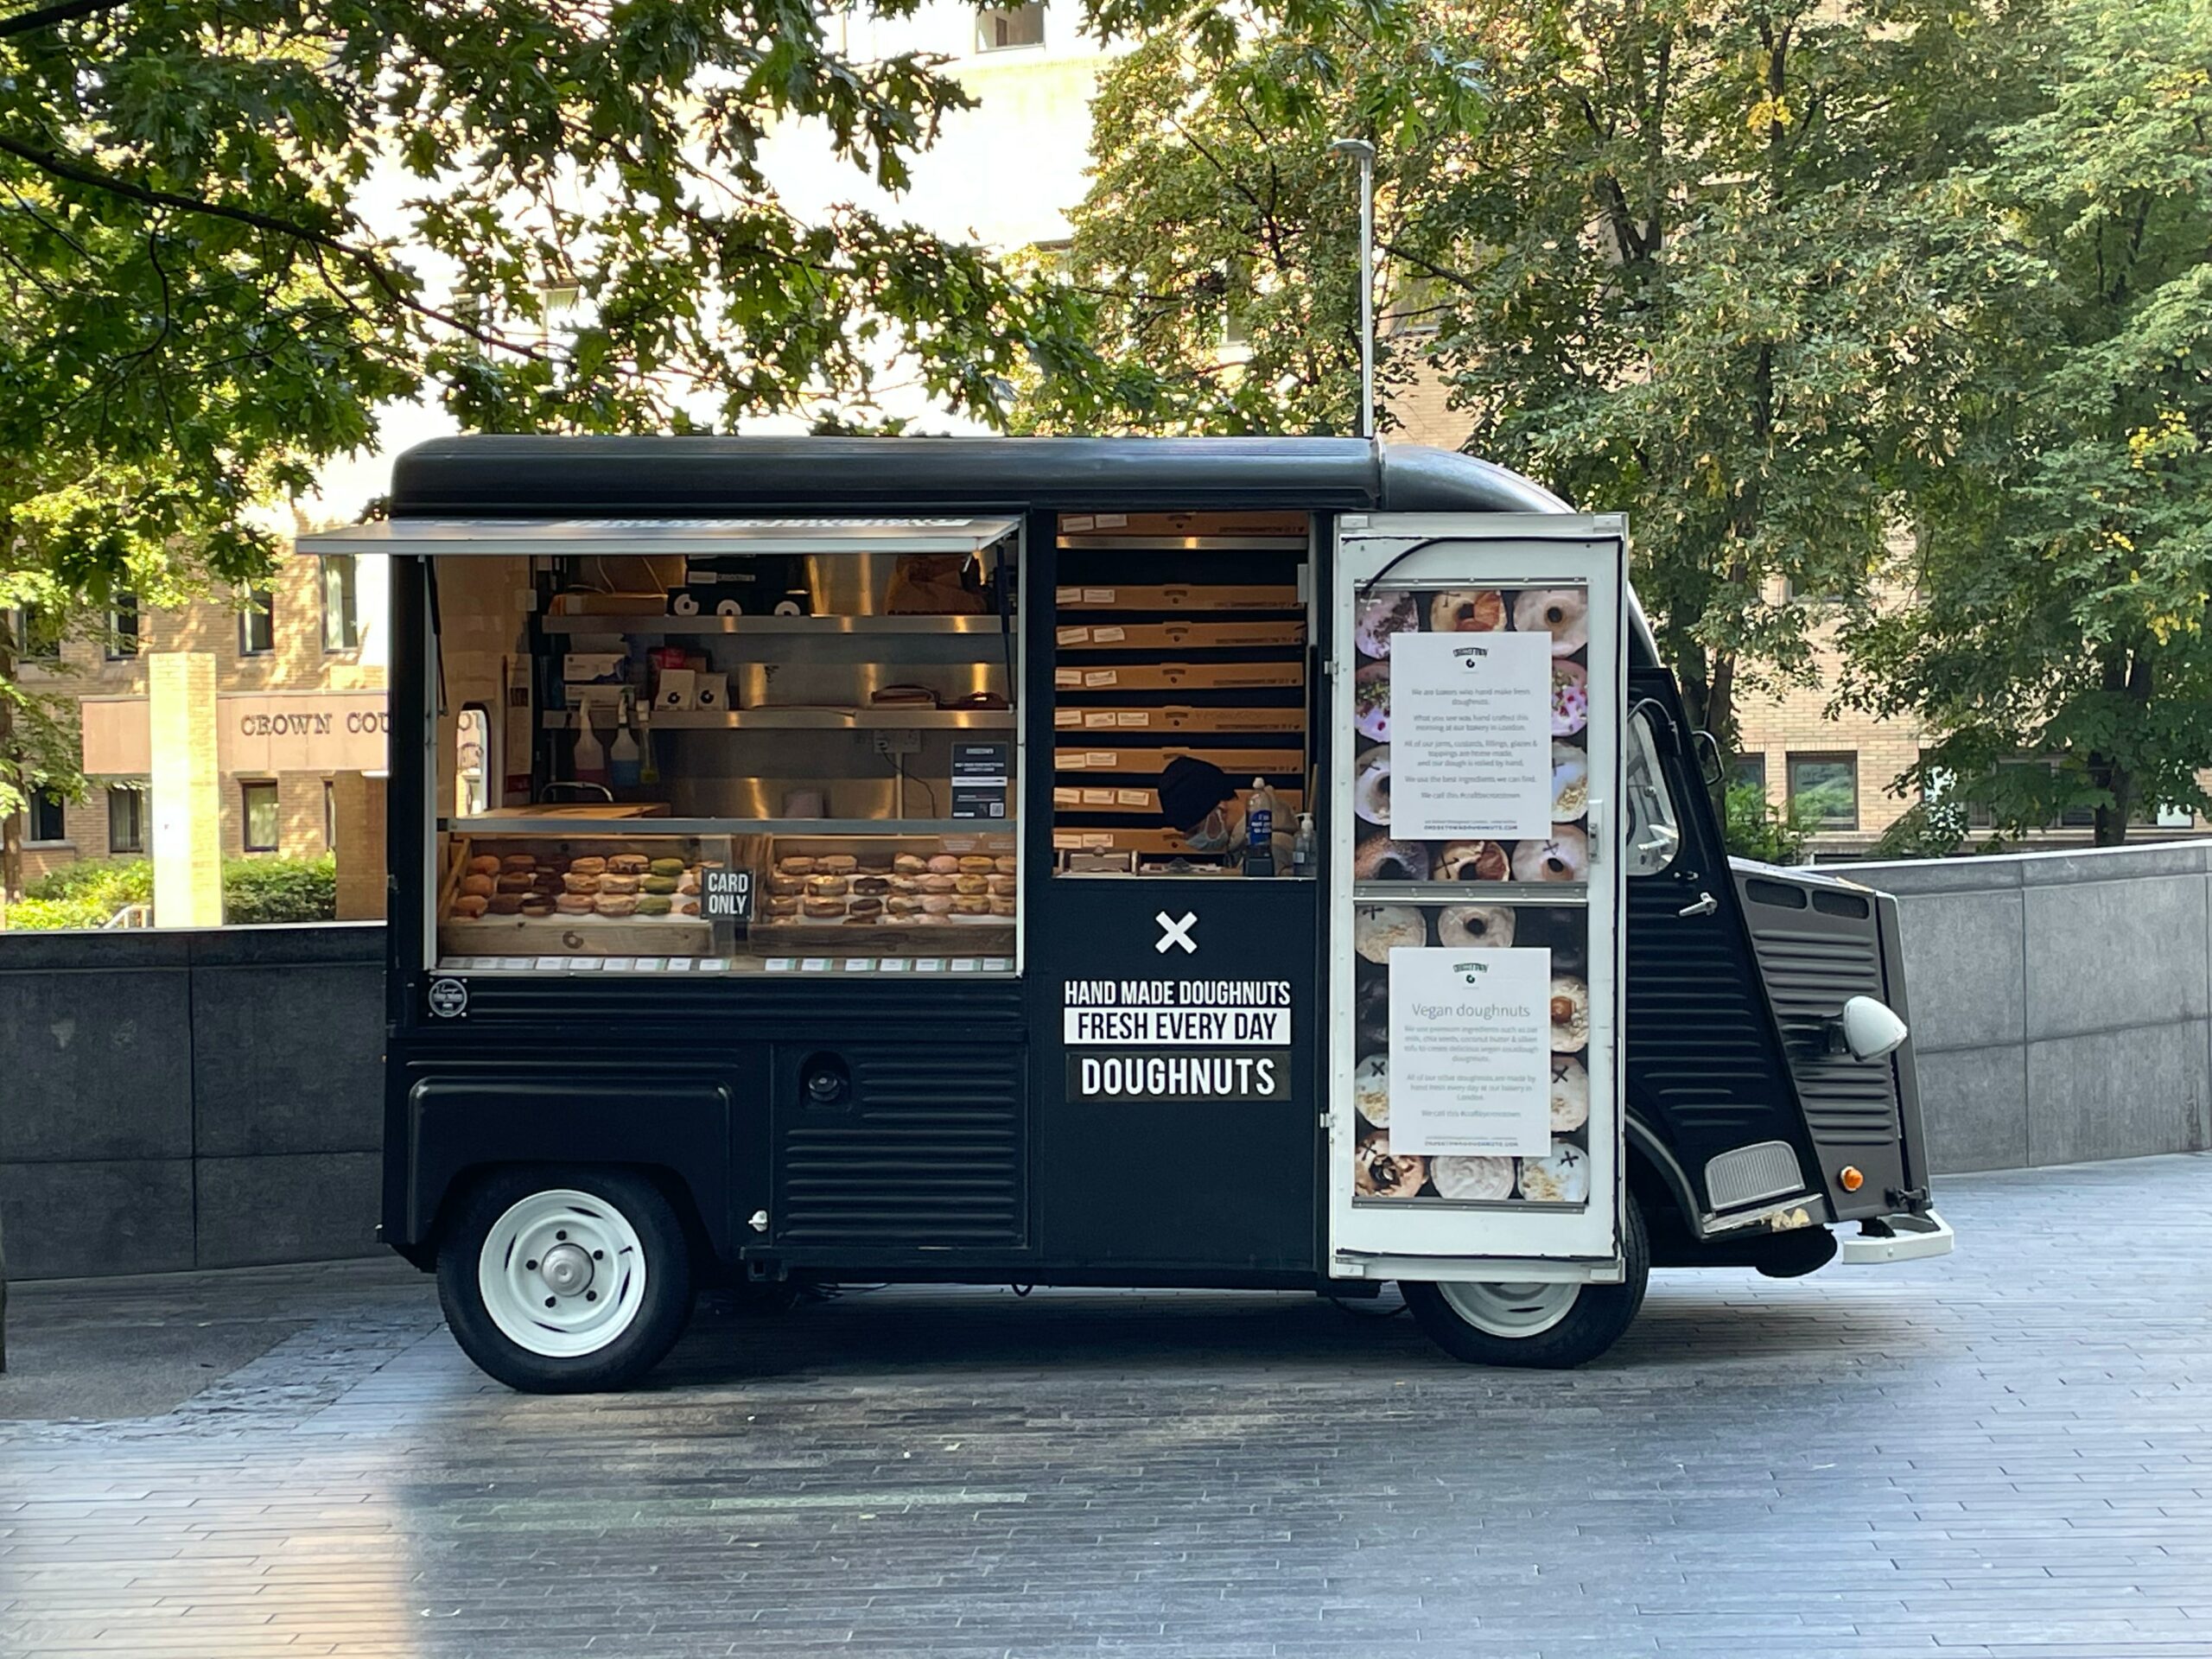 Crosstown Doughnuts van from a street food market in London